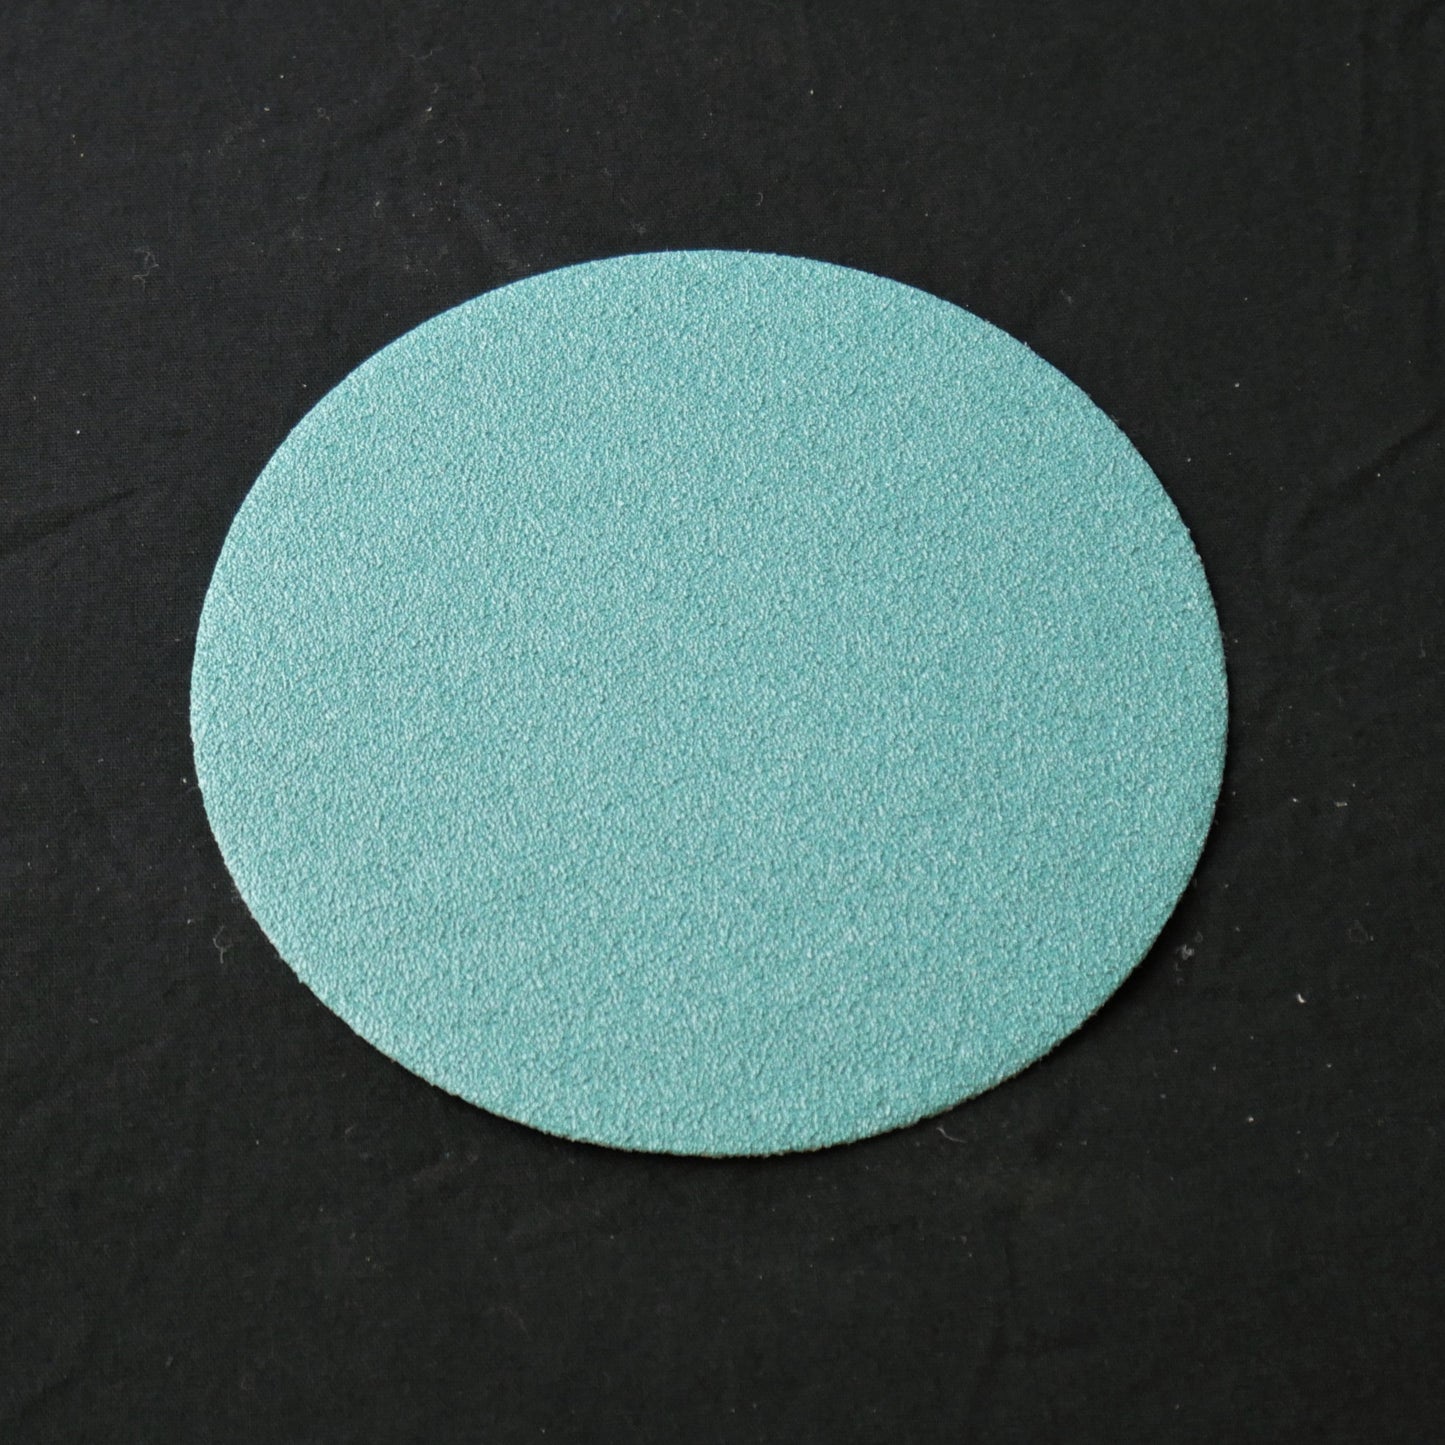 Starcke 5" Green/Teal Hook and Loop - 515- 516C Aluminum Oxide Paper